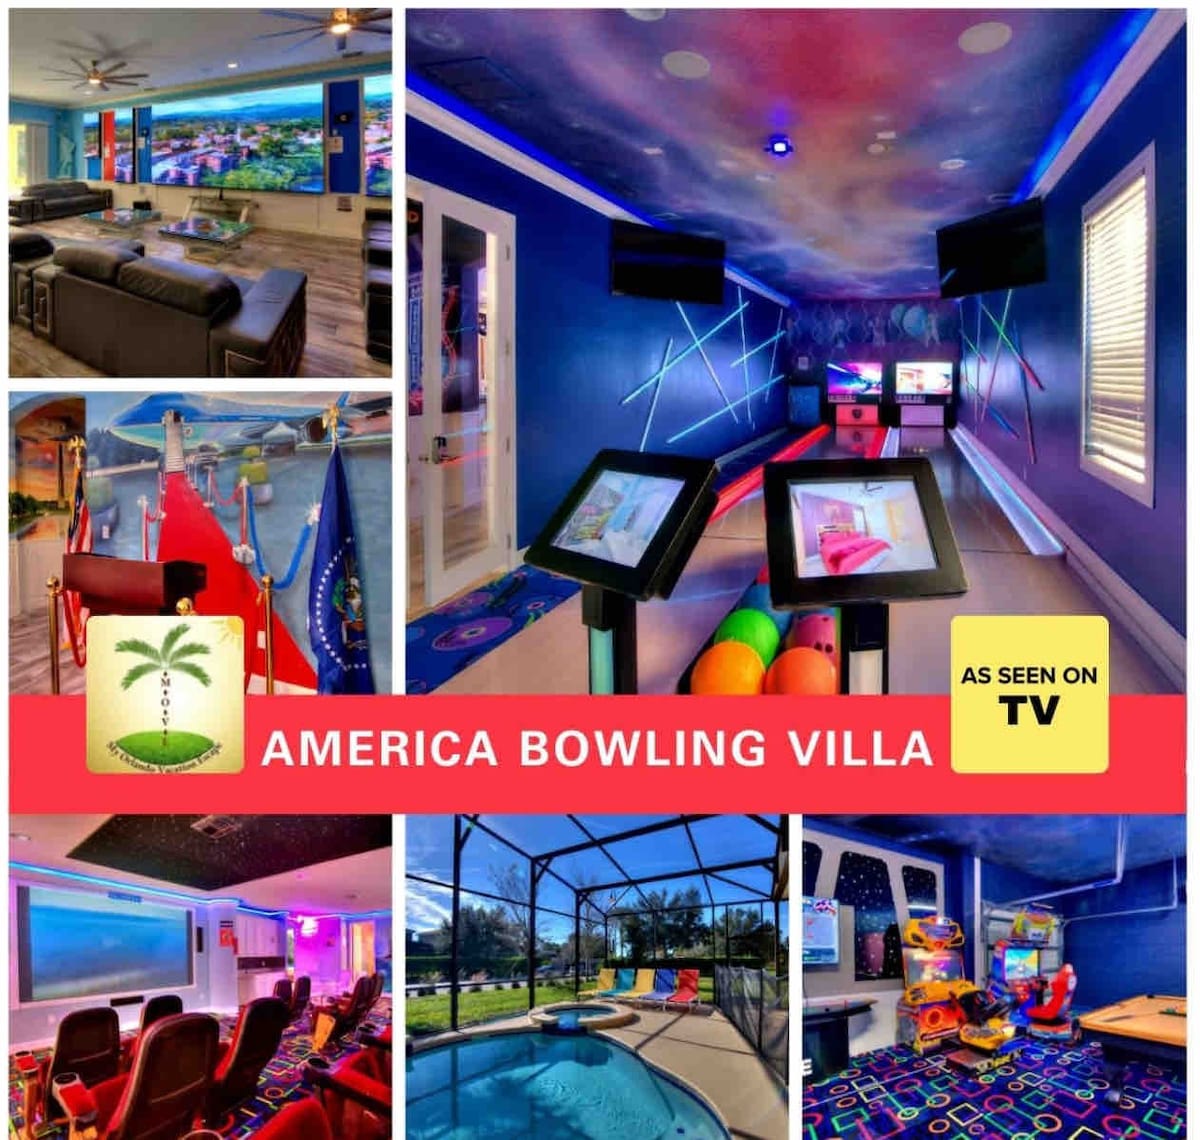 America Bowling Villa, 14 bedrooms/14.5 baths